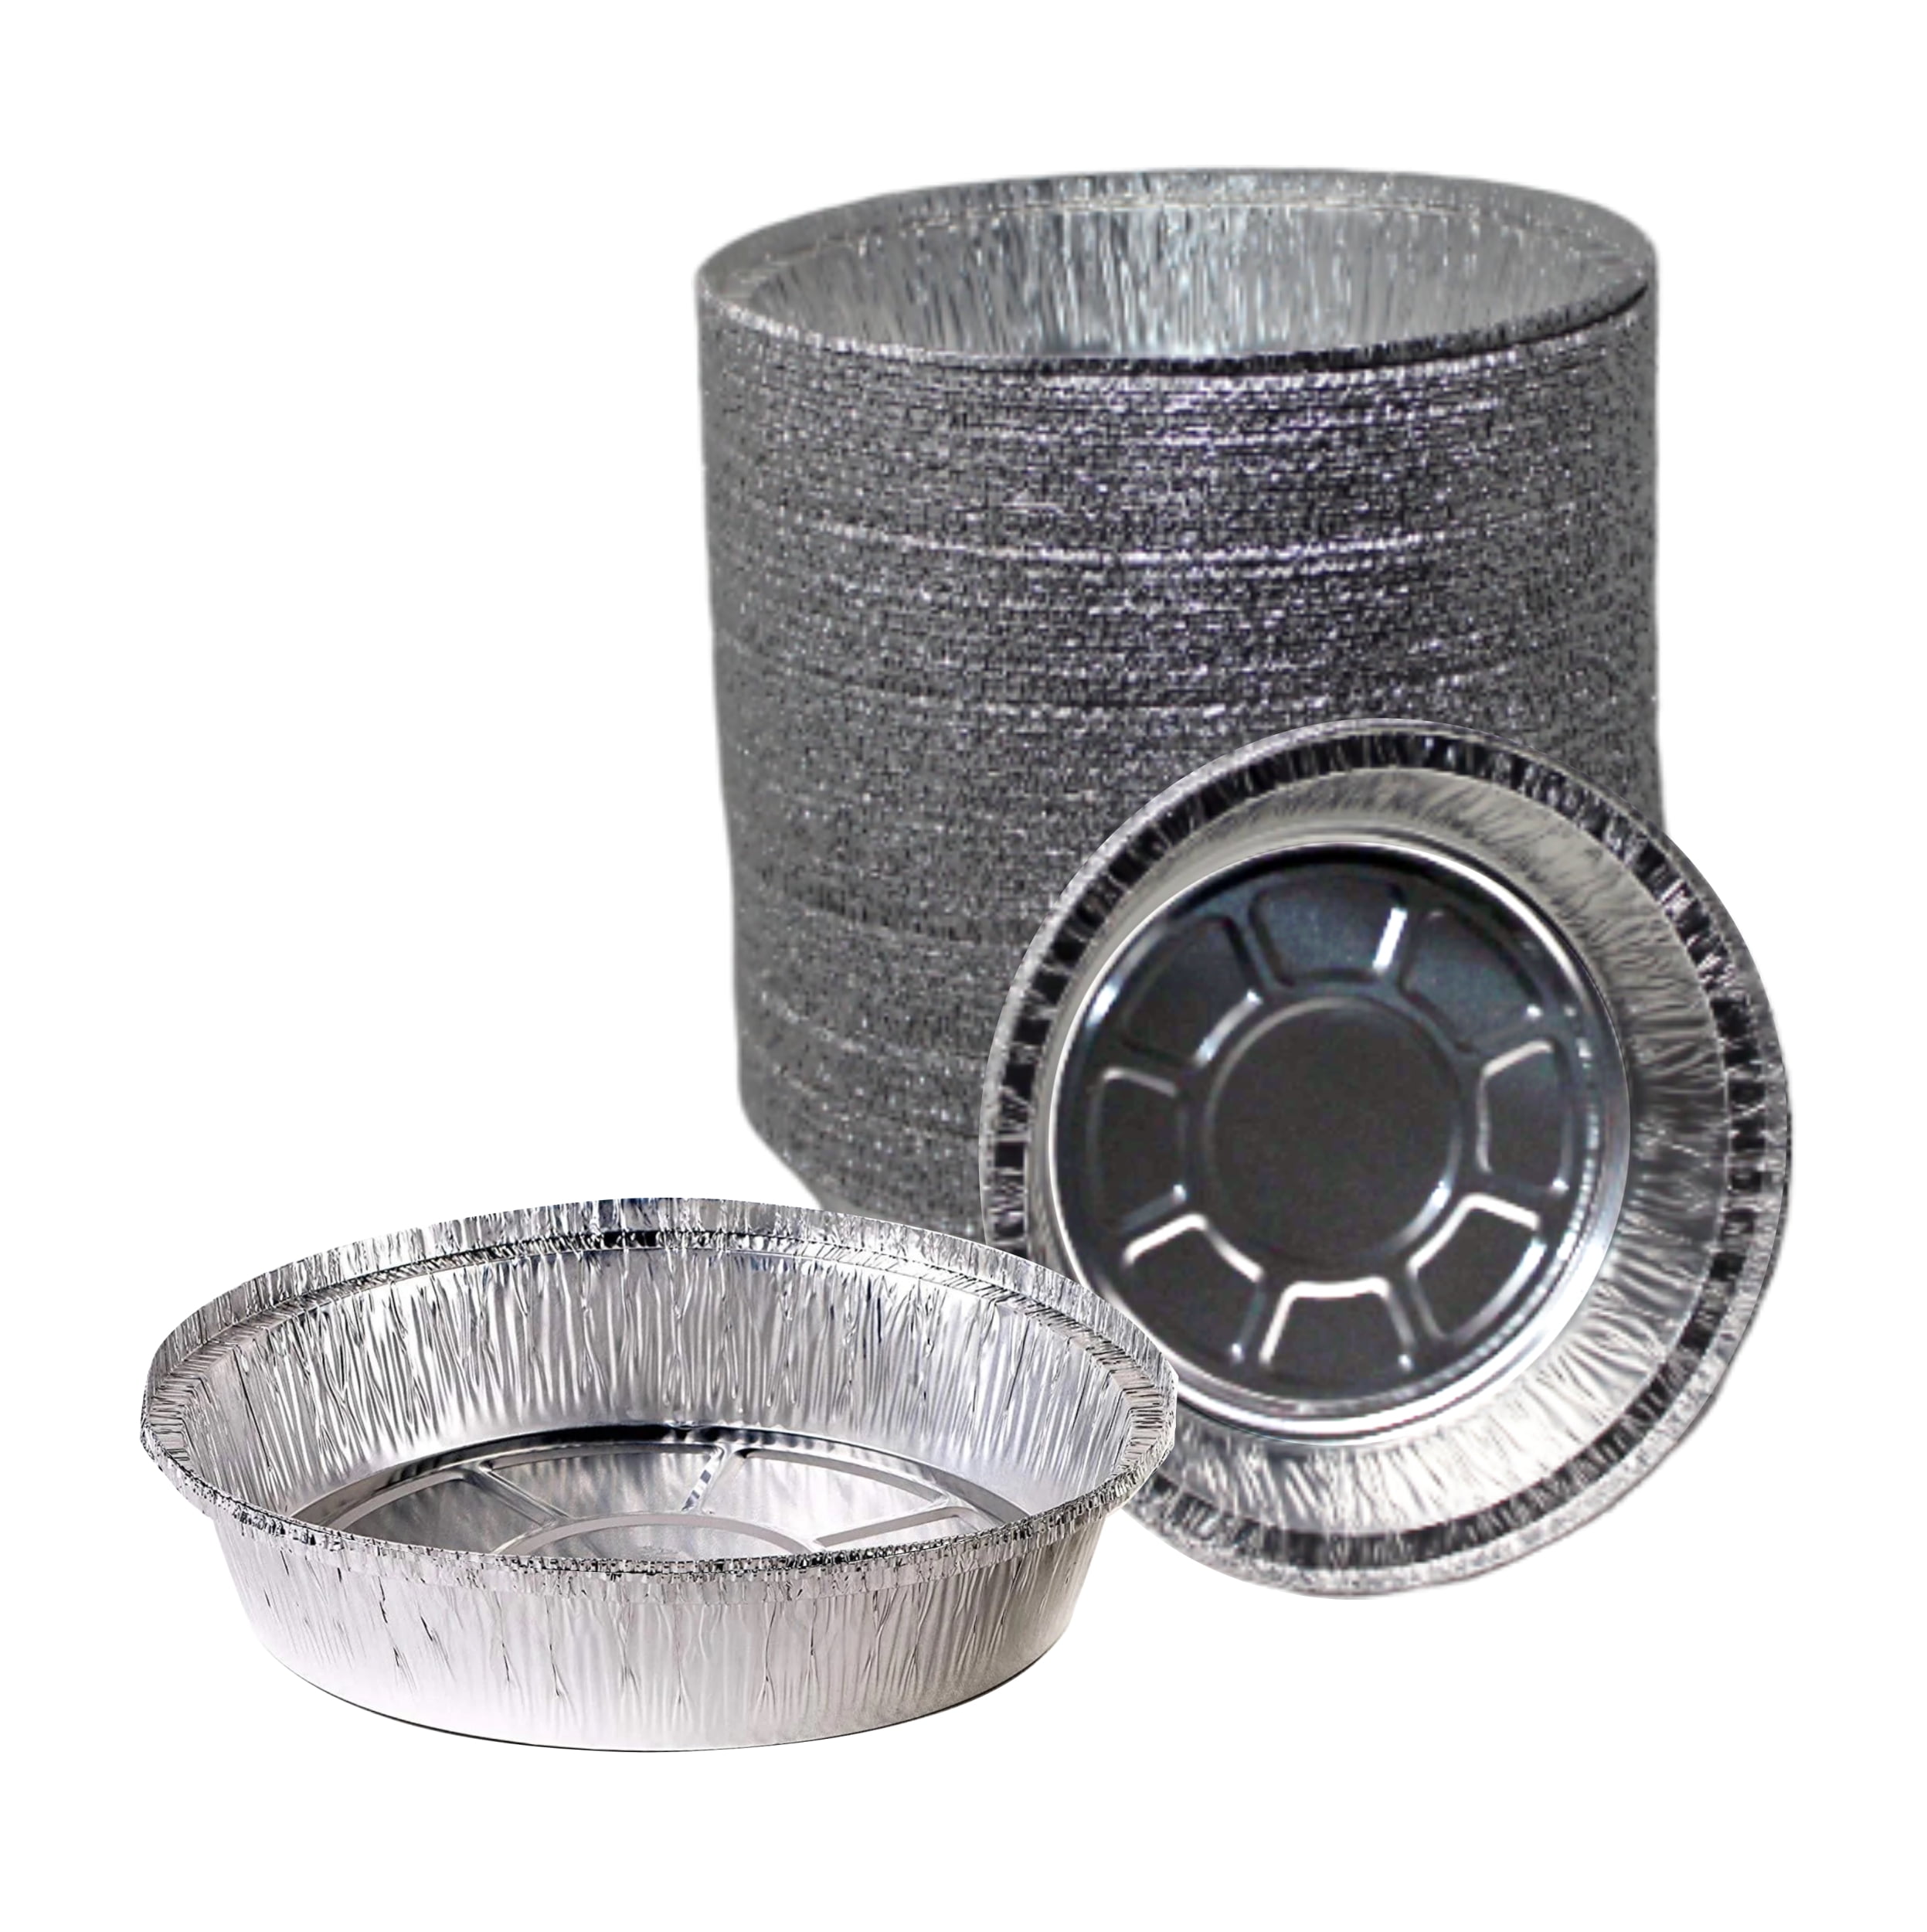 katbite 8x8 Aluminum Pans Disposable With Clear Lids for Air fryer, 25